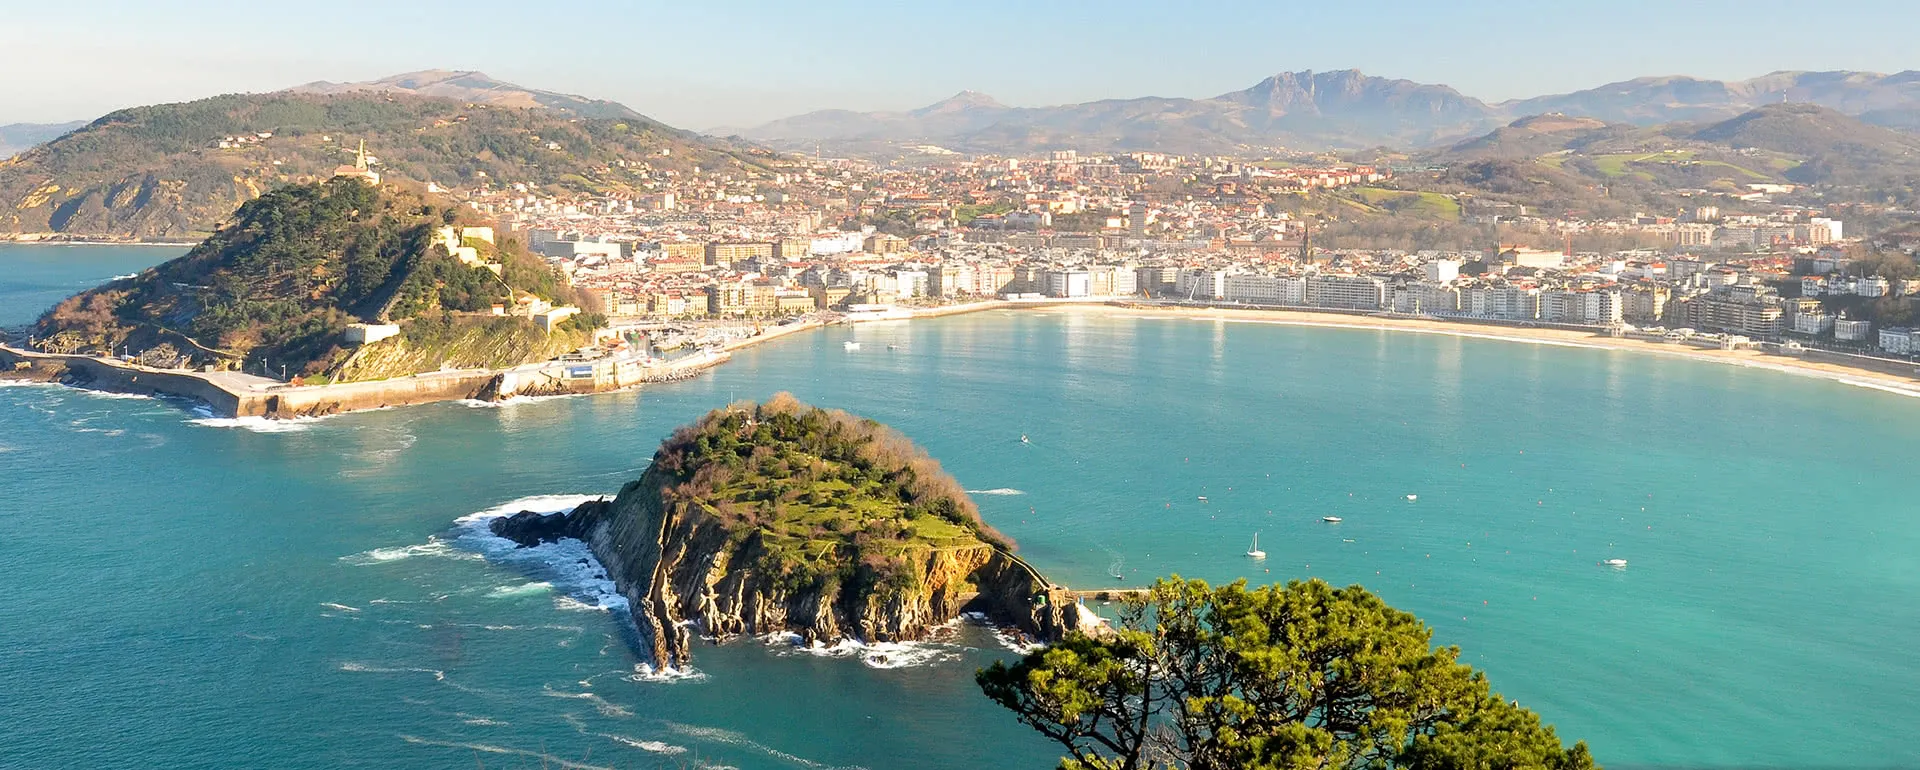 Donostia-San Sebastián - the destination with youth hostels